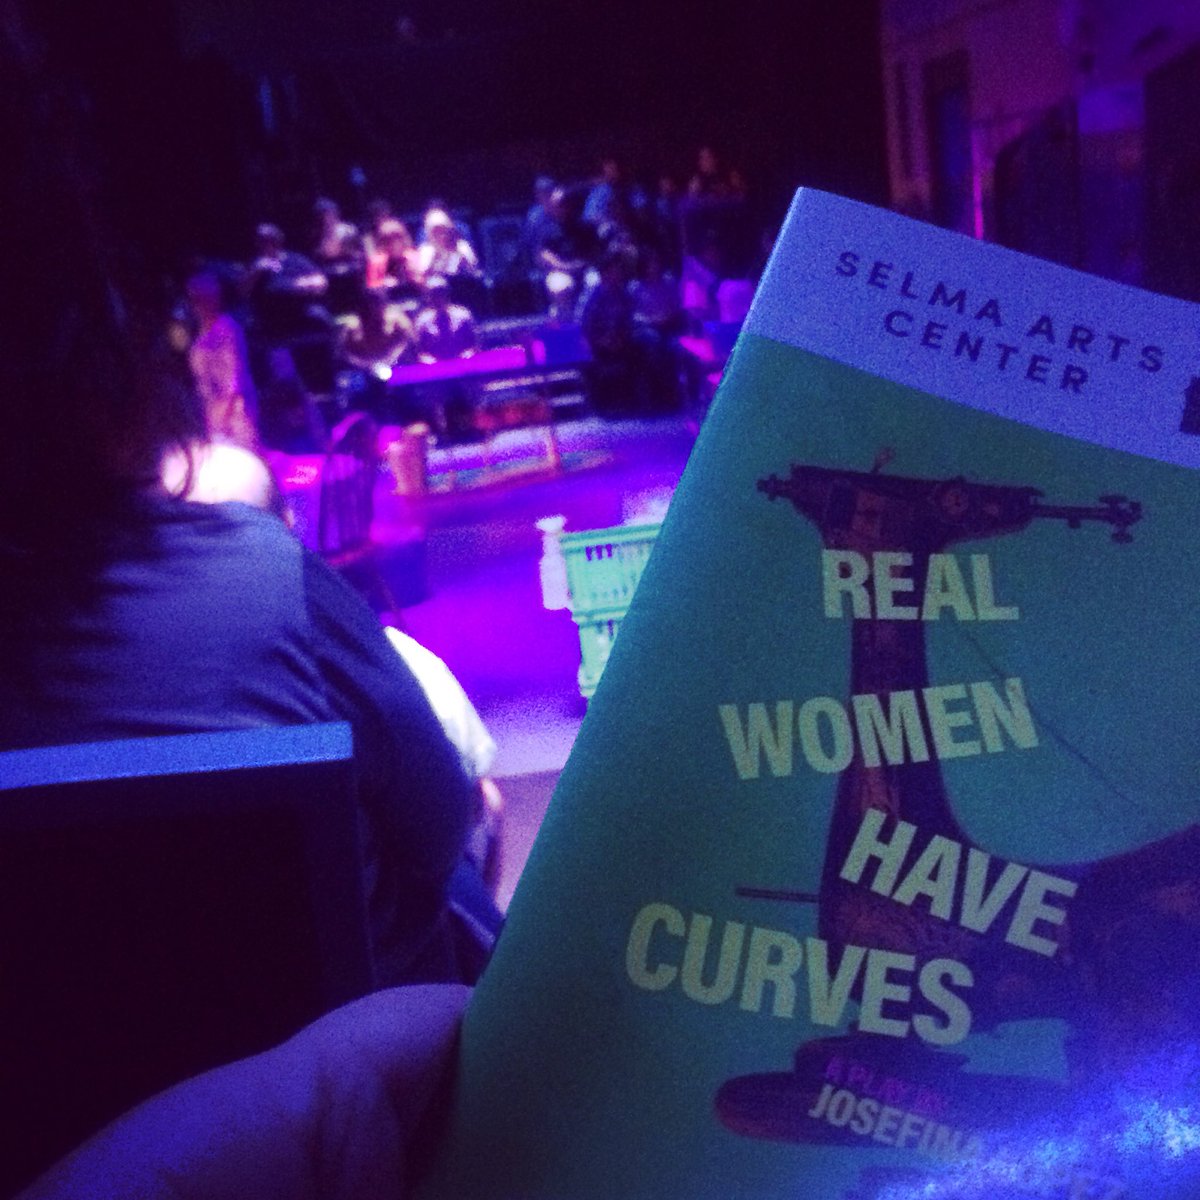 Real Women Have Curves at @selmaartscenter #blackboxtheatre #goseeashow